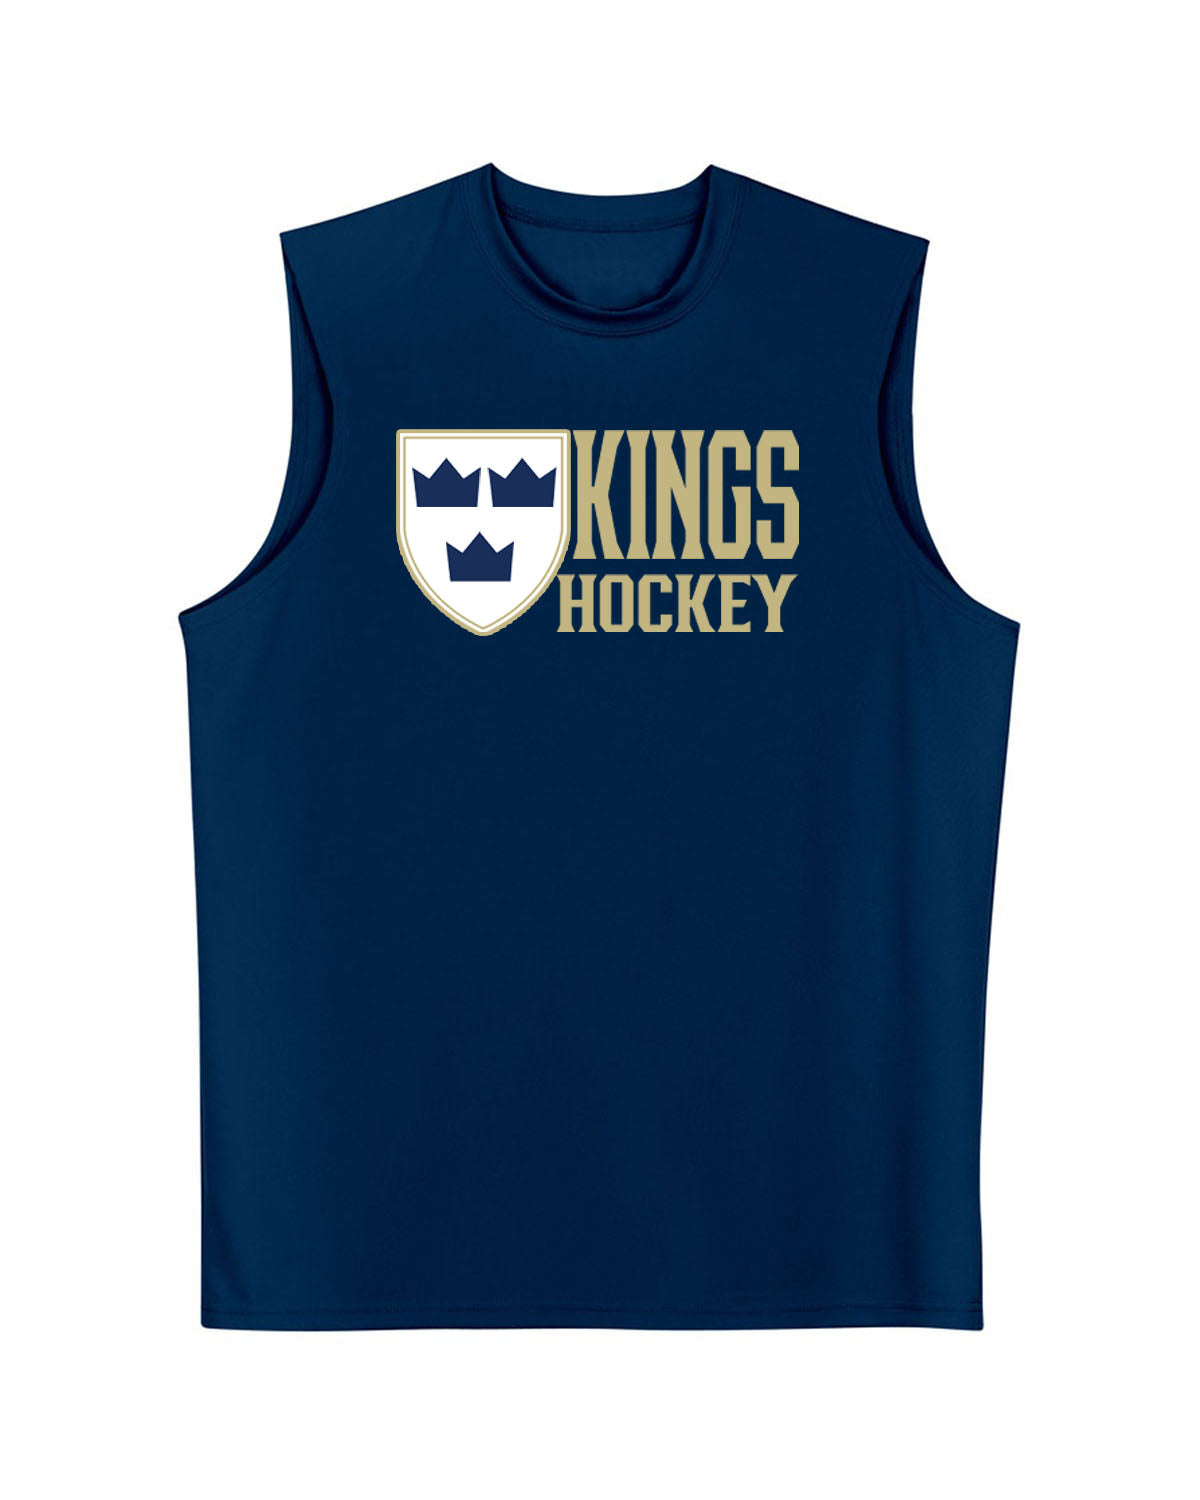 Kings Hockey Design 4 Men's Performance Tank Top